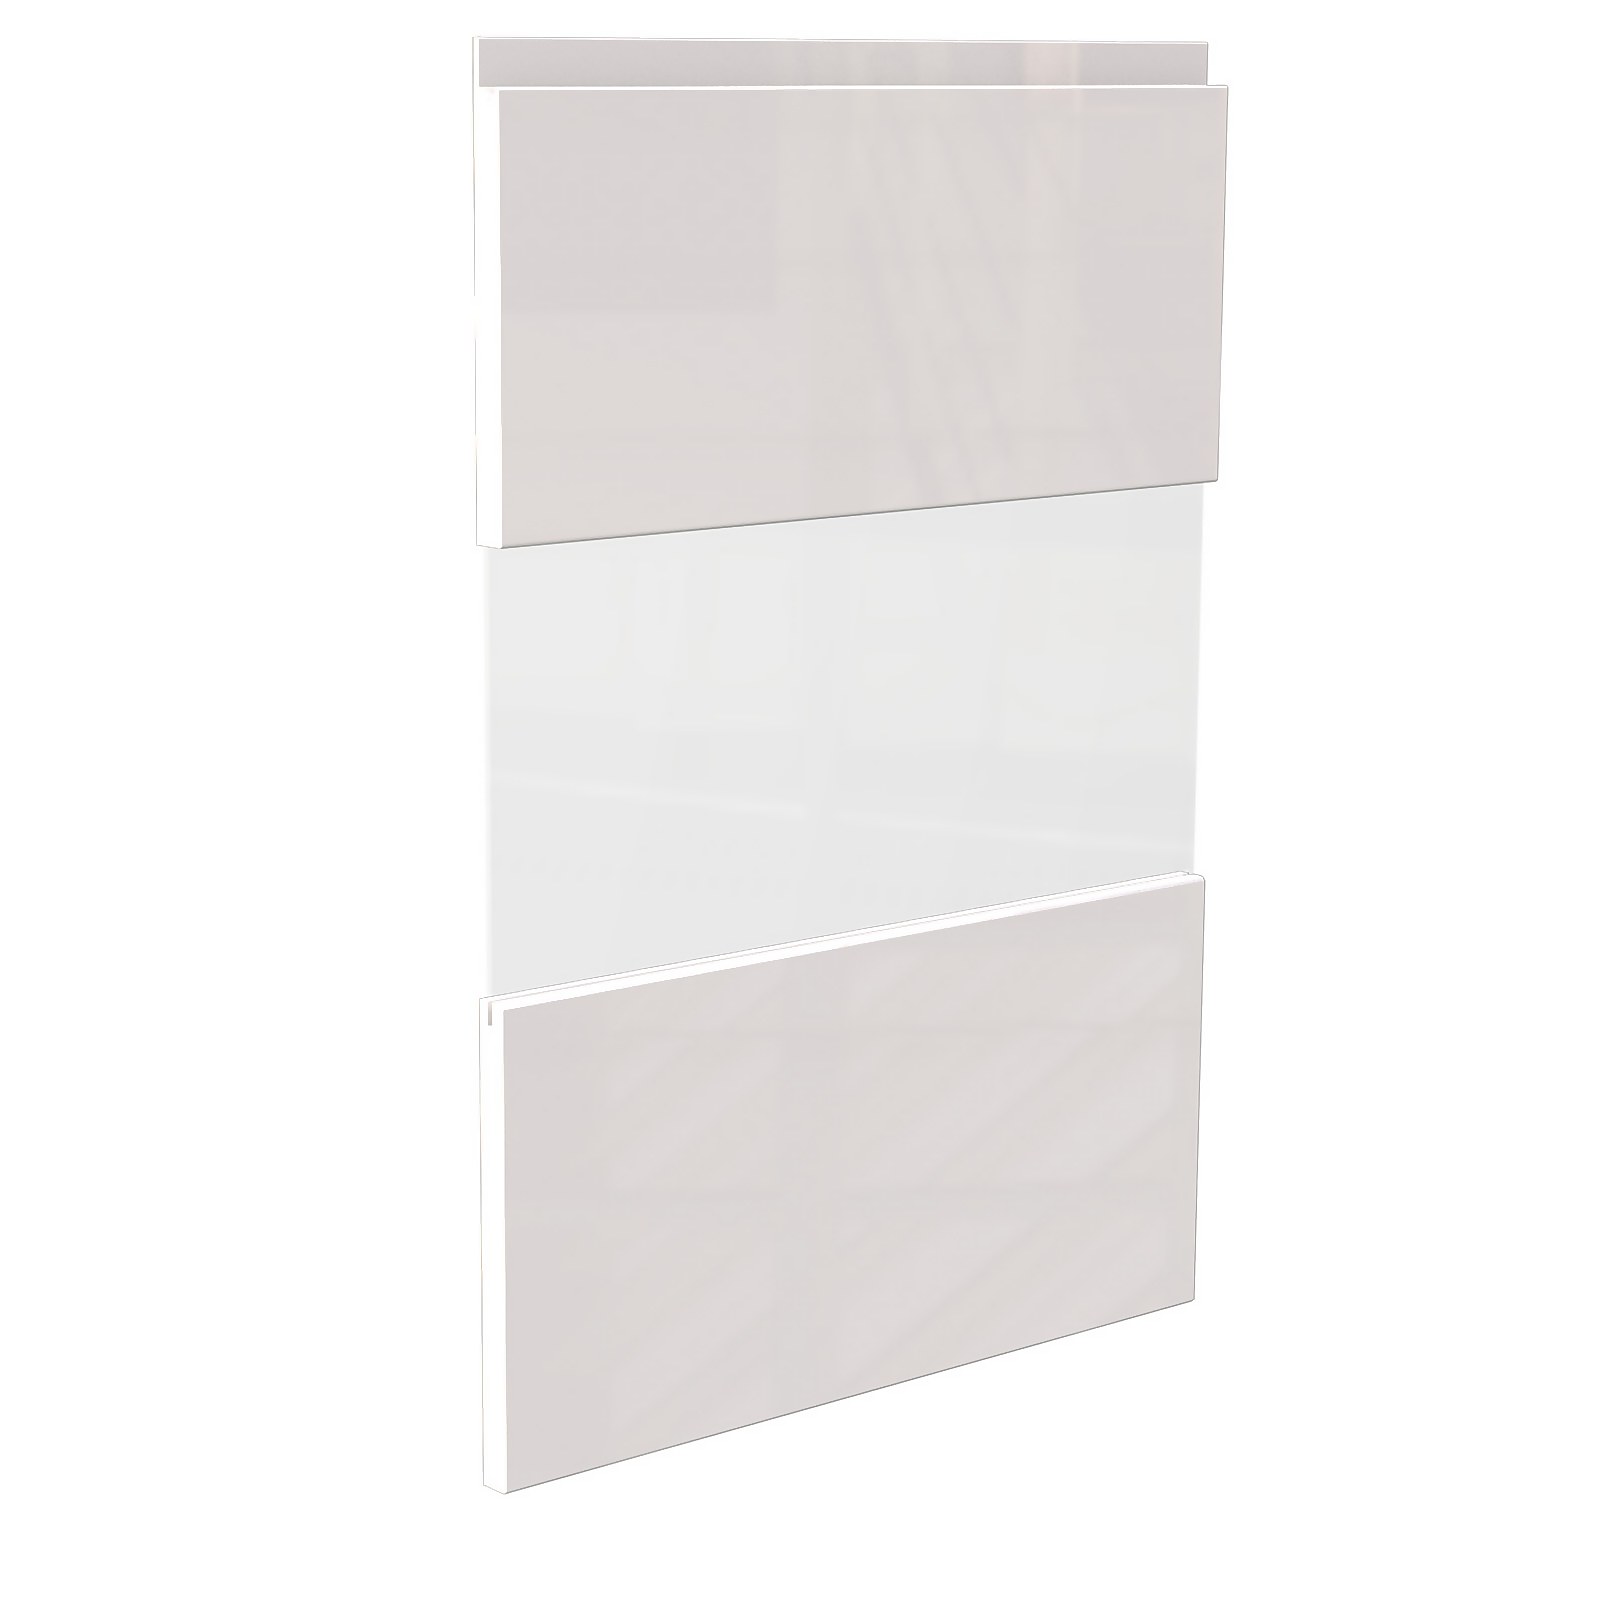 Handleless Glass Kitchen Cabinet Door (W)497mm - Gloss White